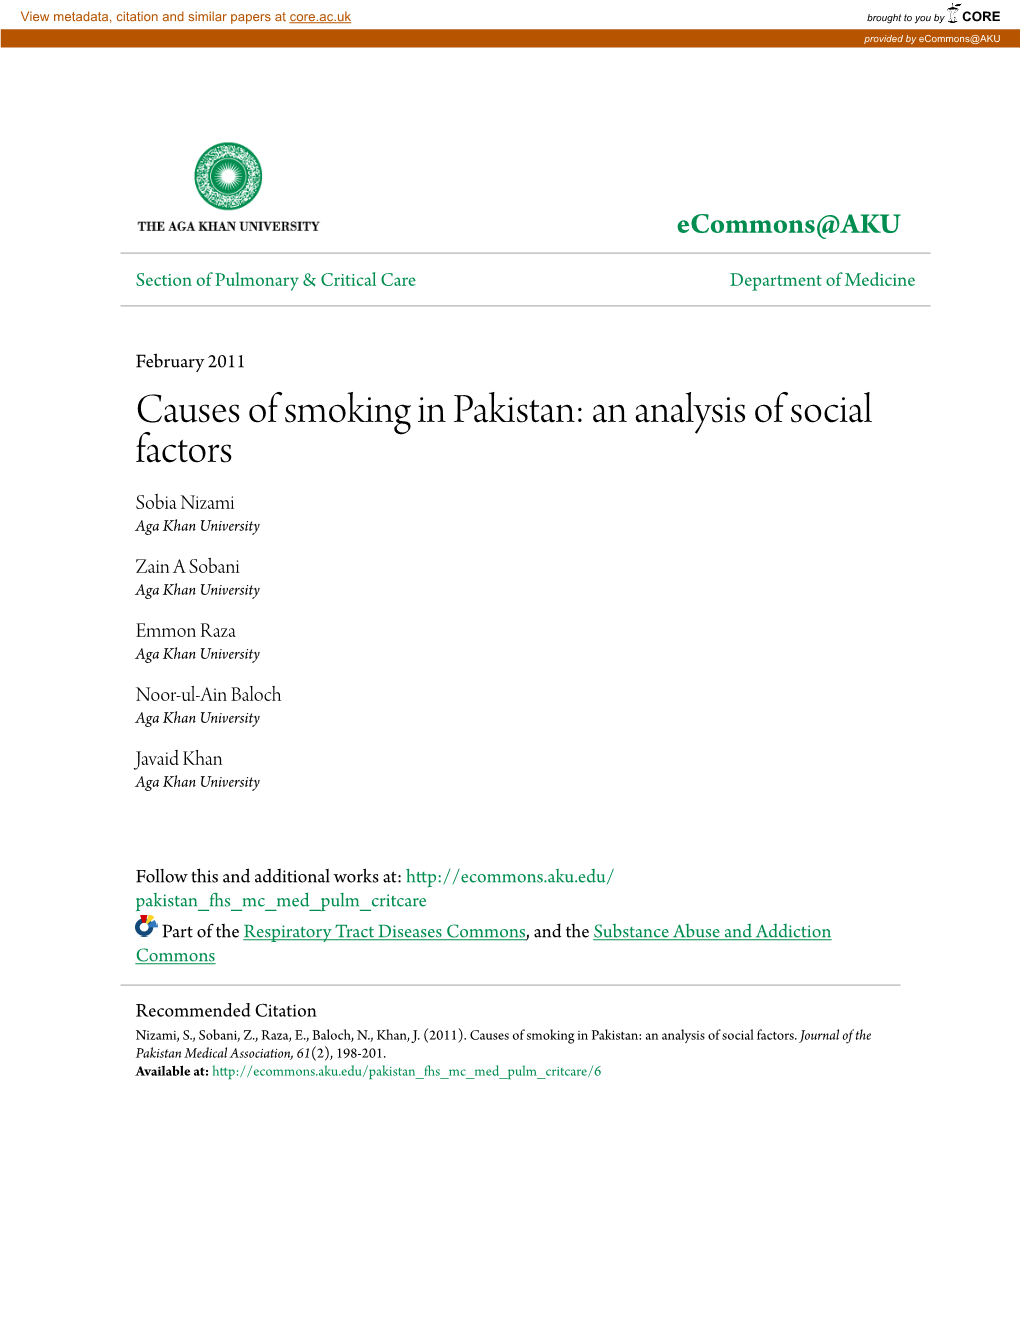 Causes of Smoking in Pakistan: an Analysis of Social Factors Sobia Nizami Aga Khan University